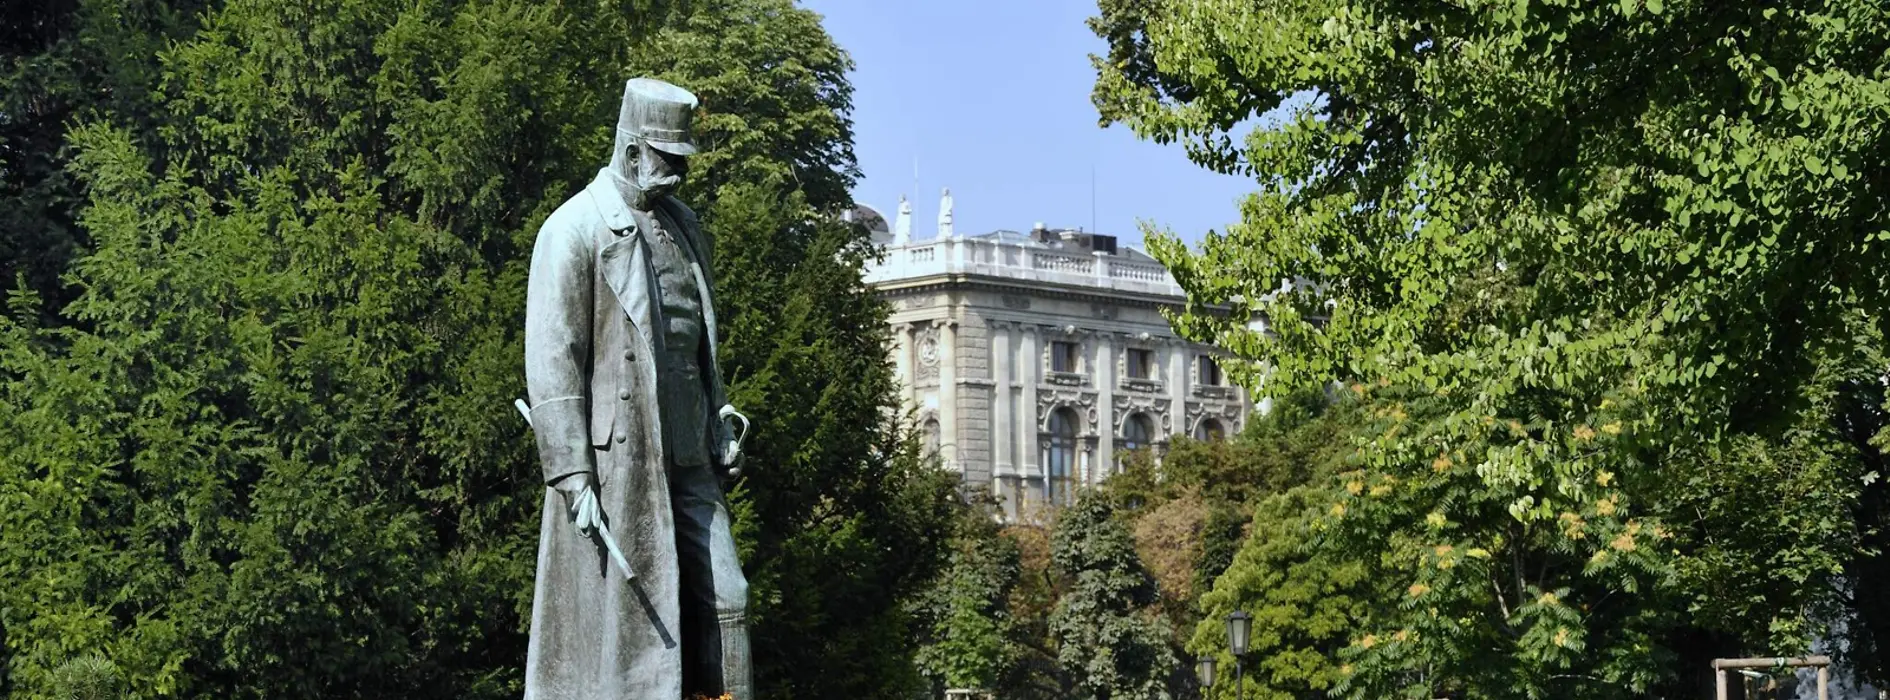 Kaiser Franz Josef-Statue, Burggarten